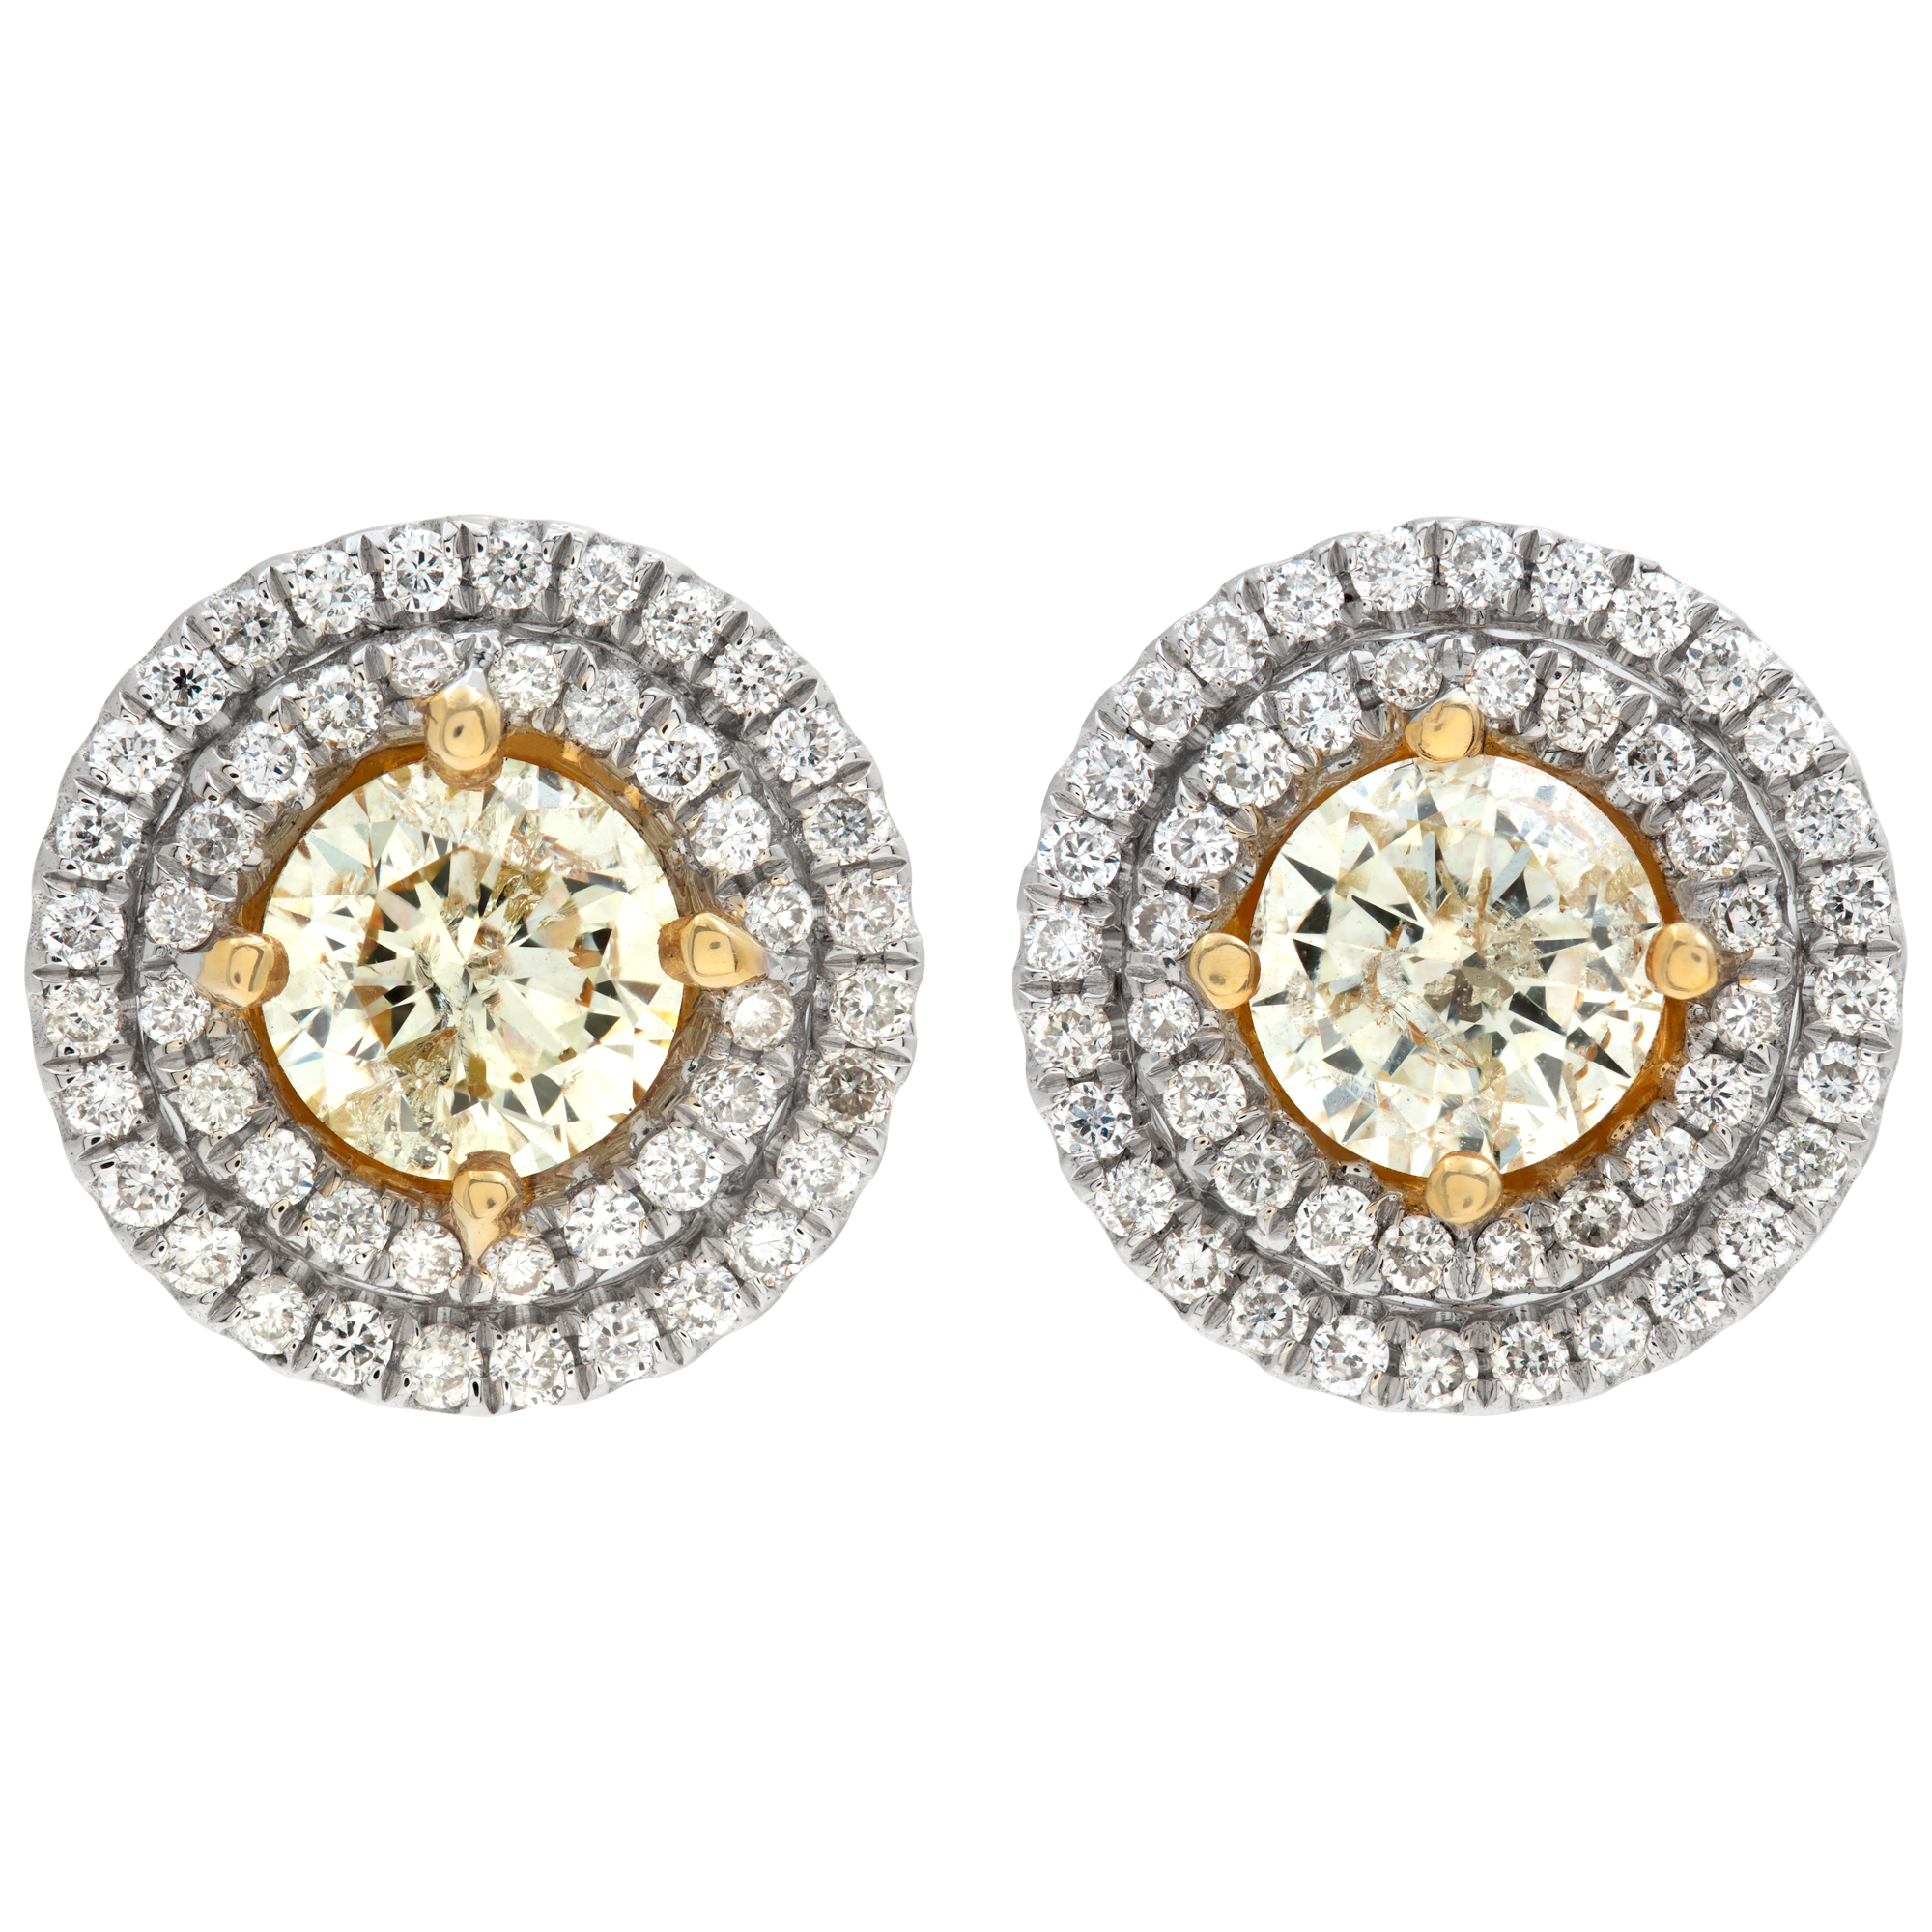 Yellow & white diamond earrings in 18k white gold